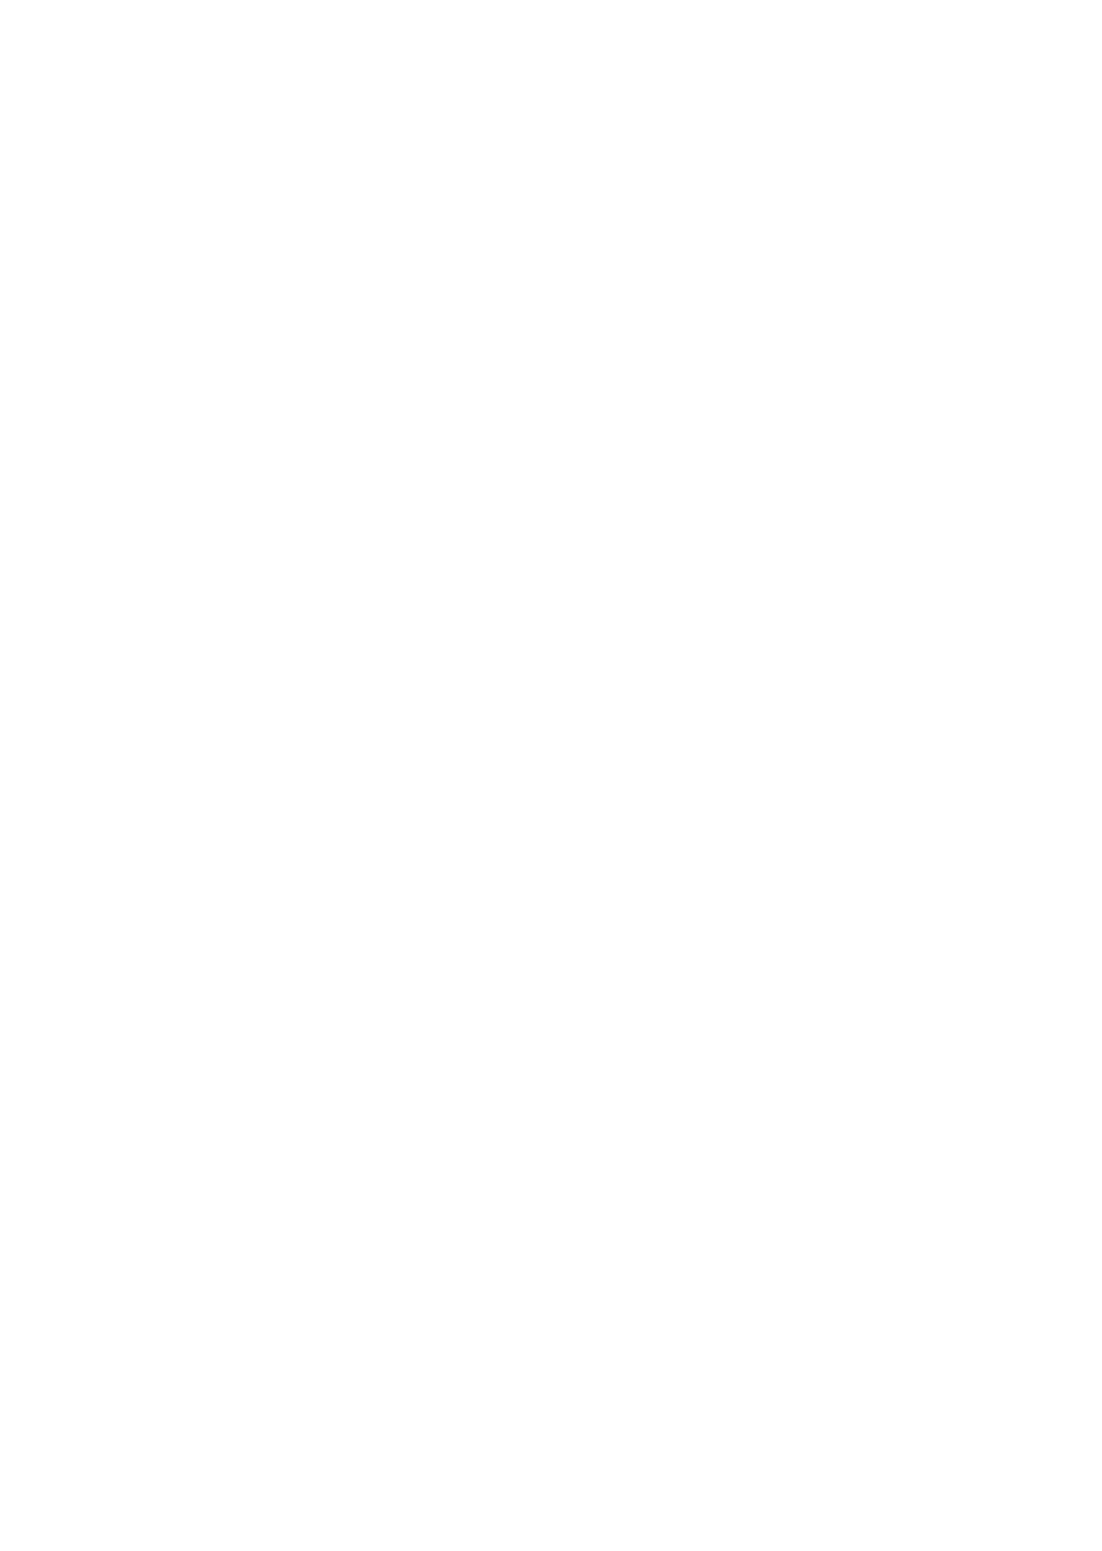 Tanger Factory Outlet Centers
 logo for dark backgrounds (transparent PNG)